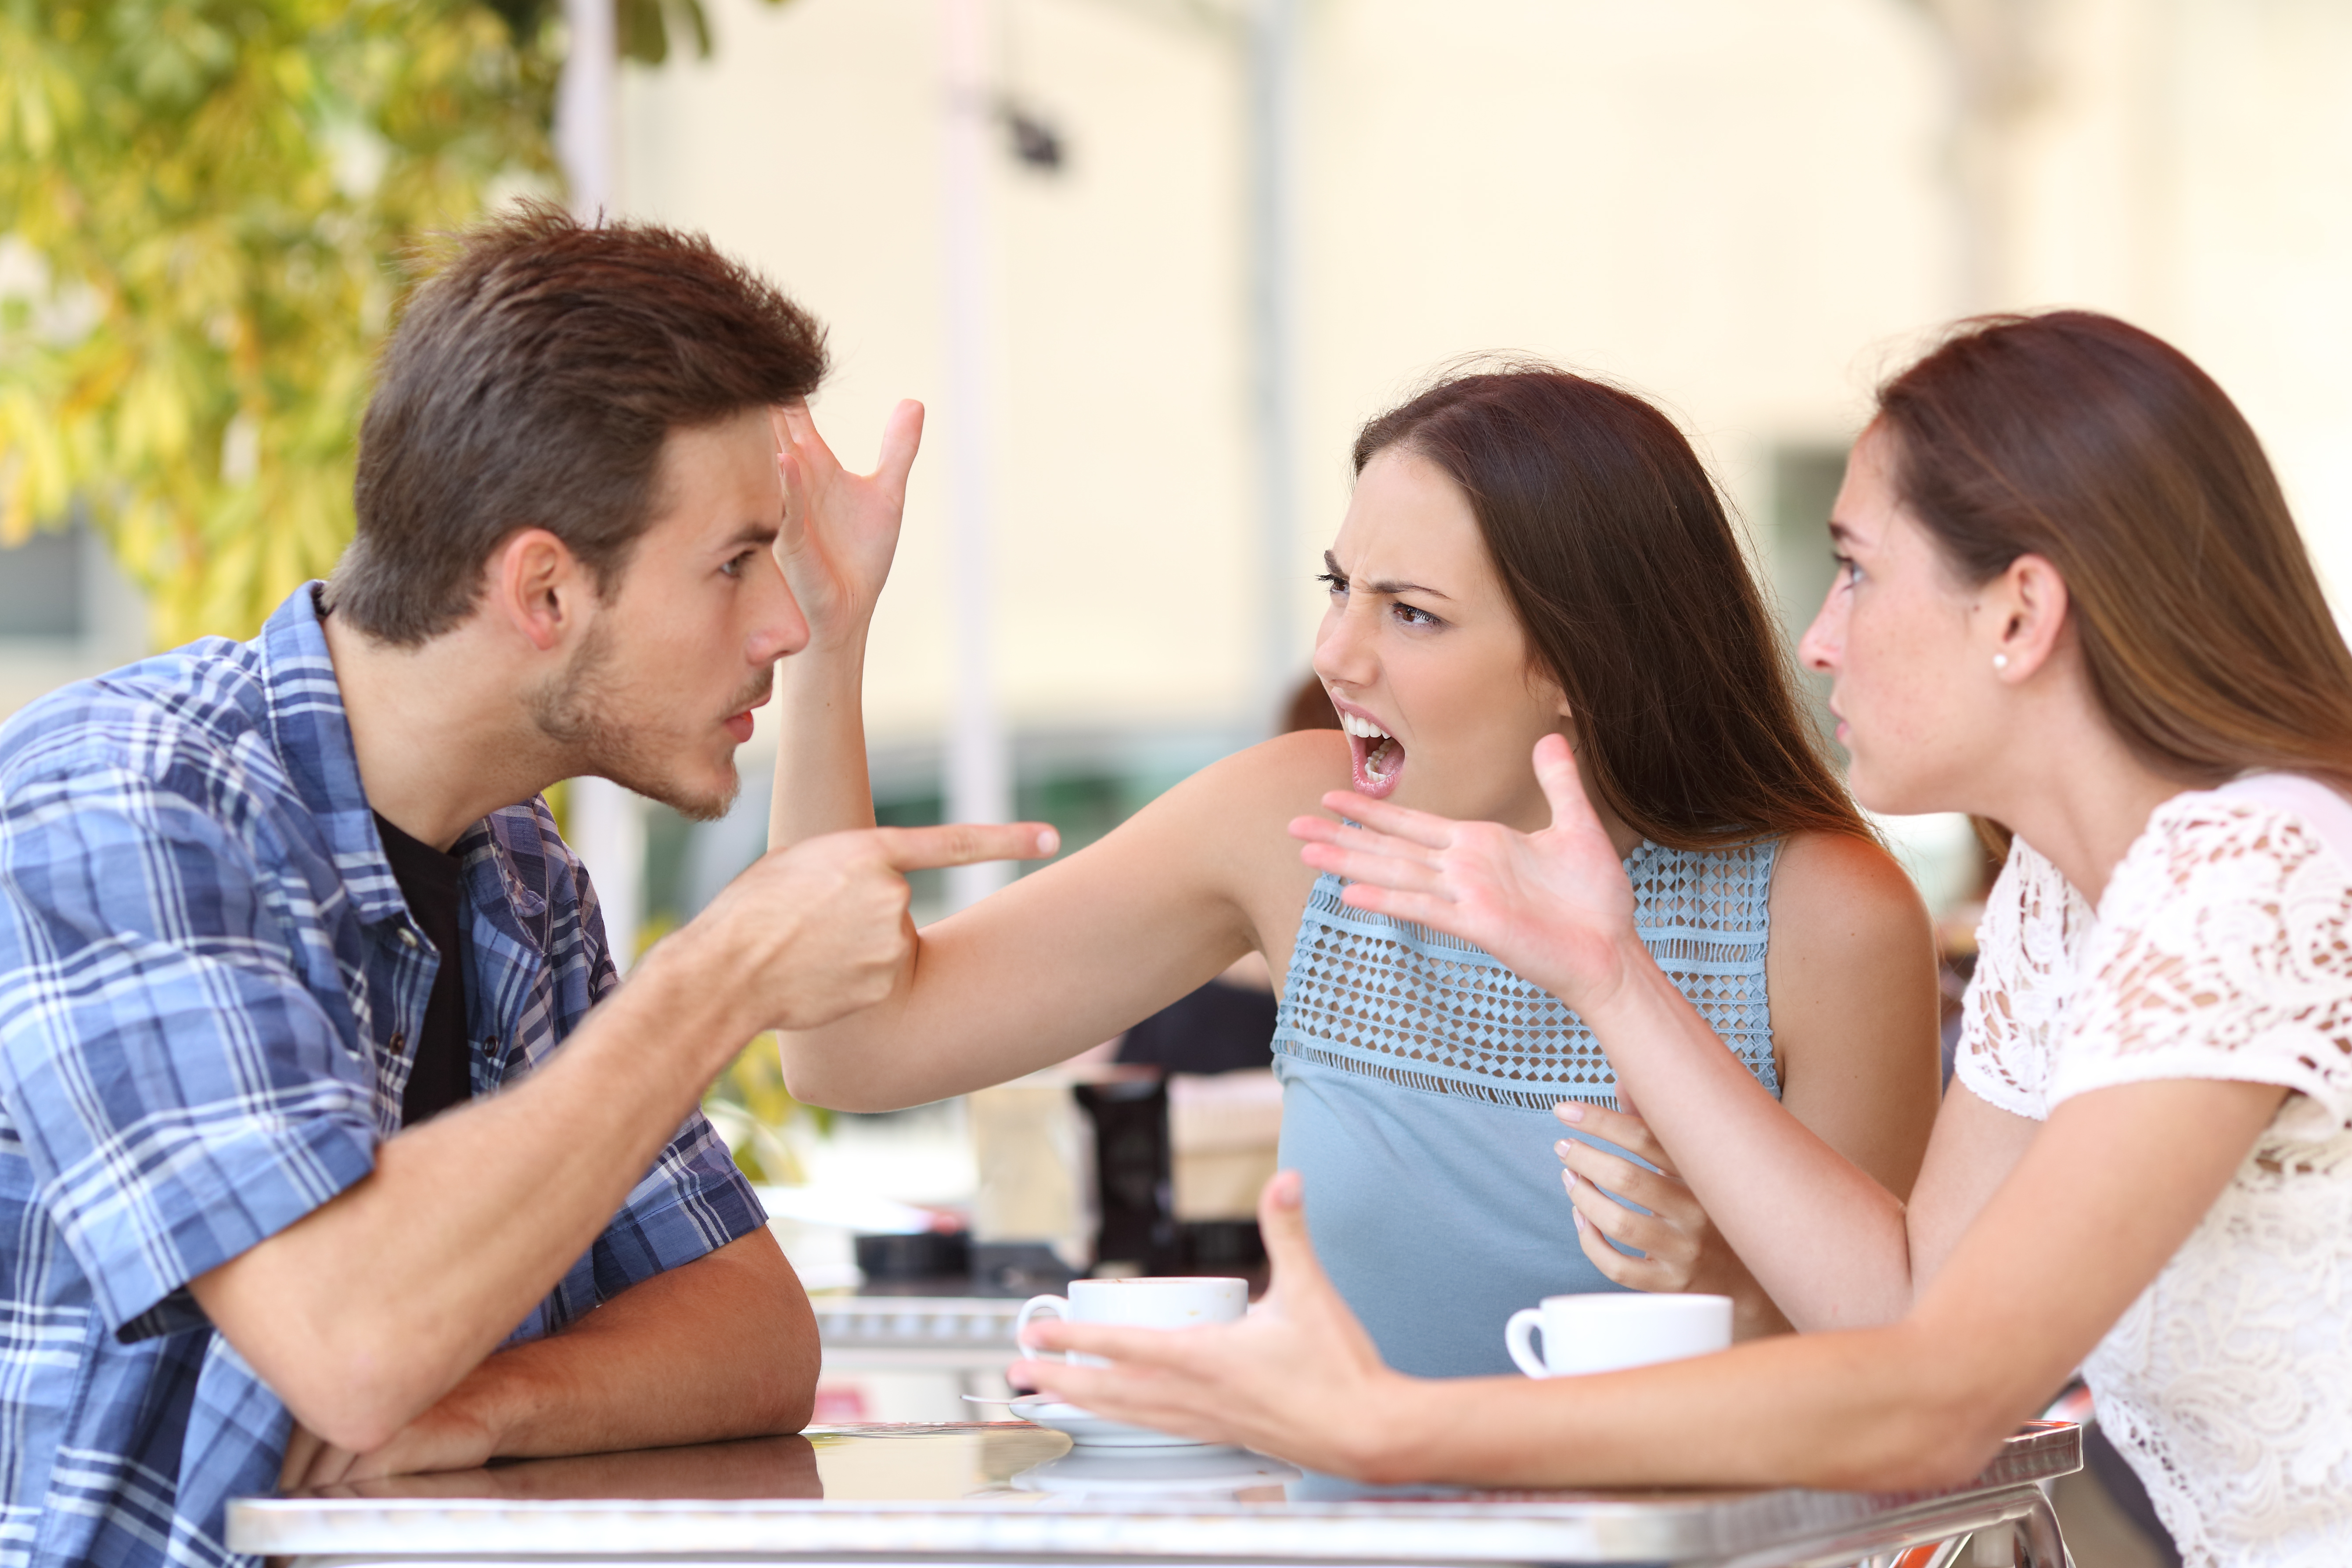 Two women and man arguing in public | Source: Shutterstck